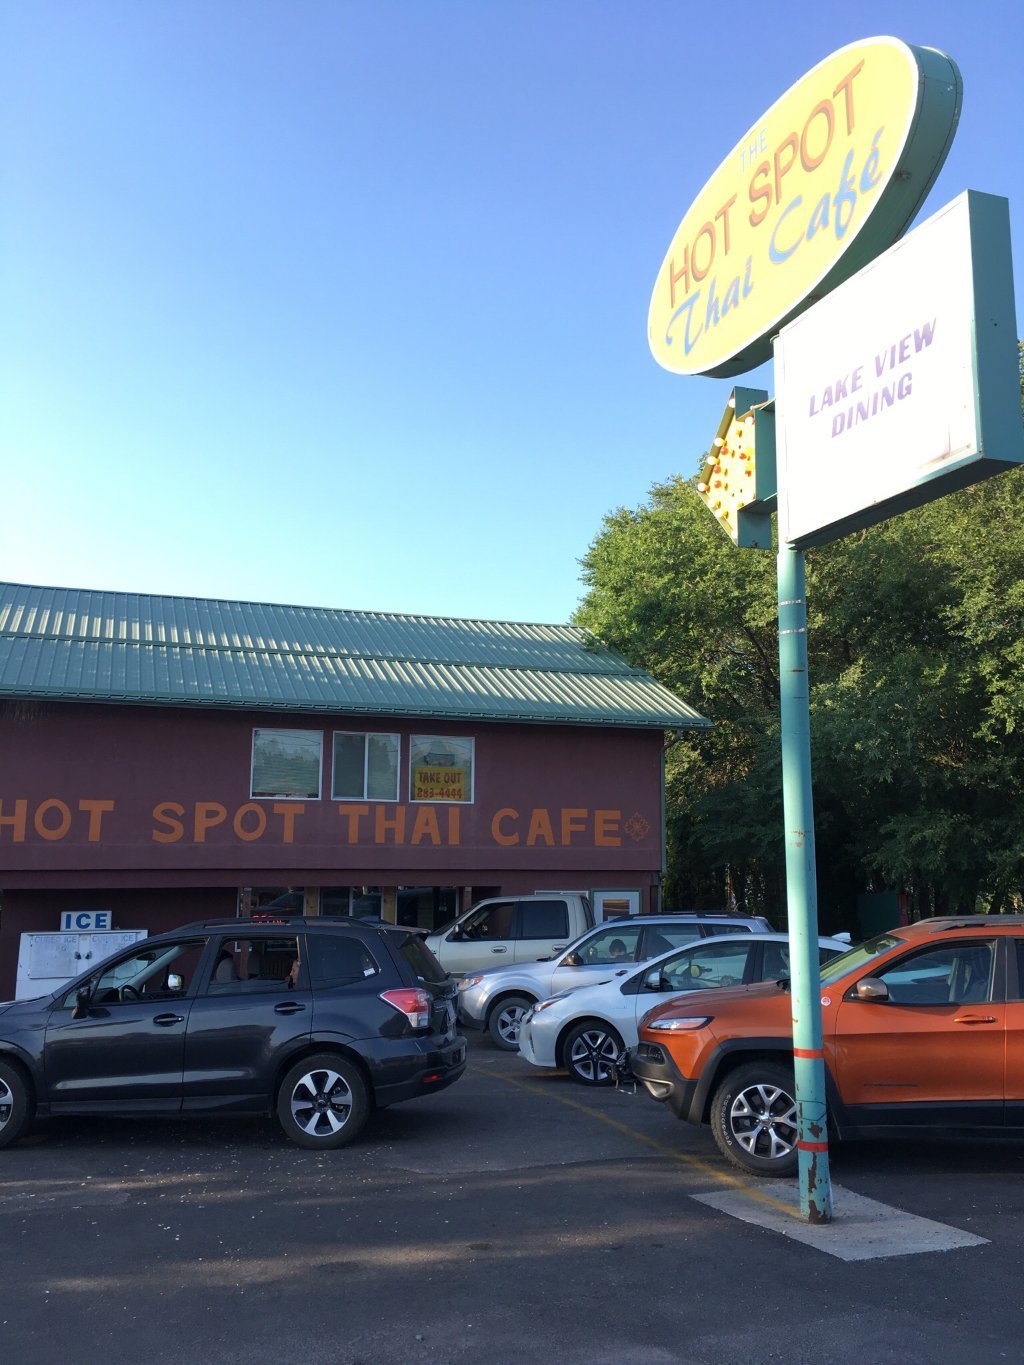 Hot Spot tdai Cafe